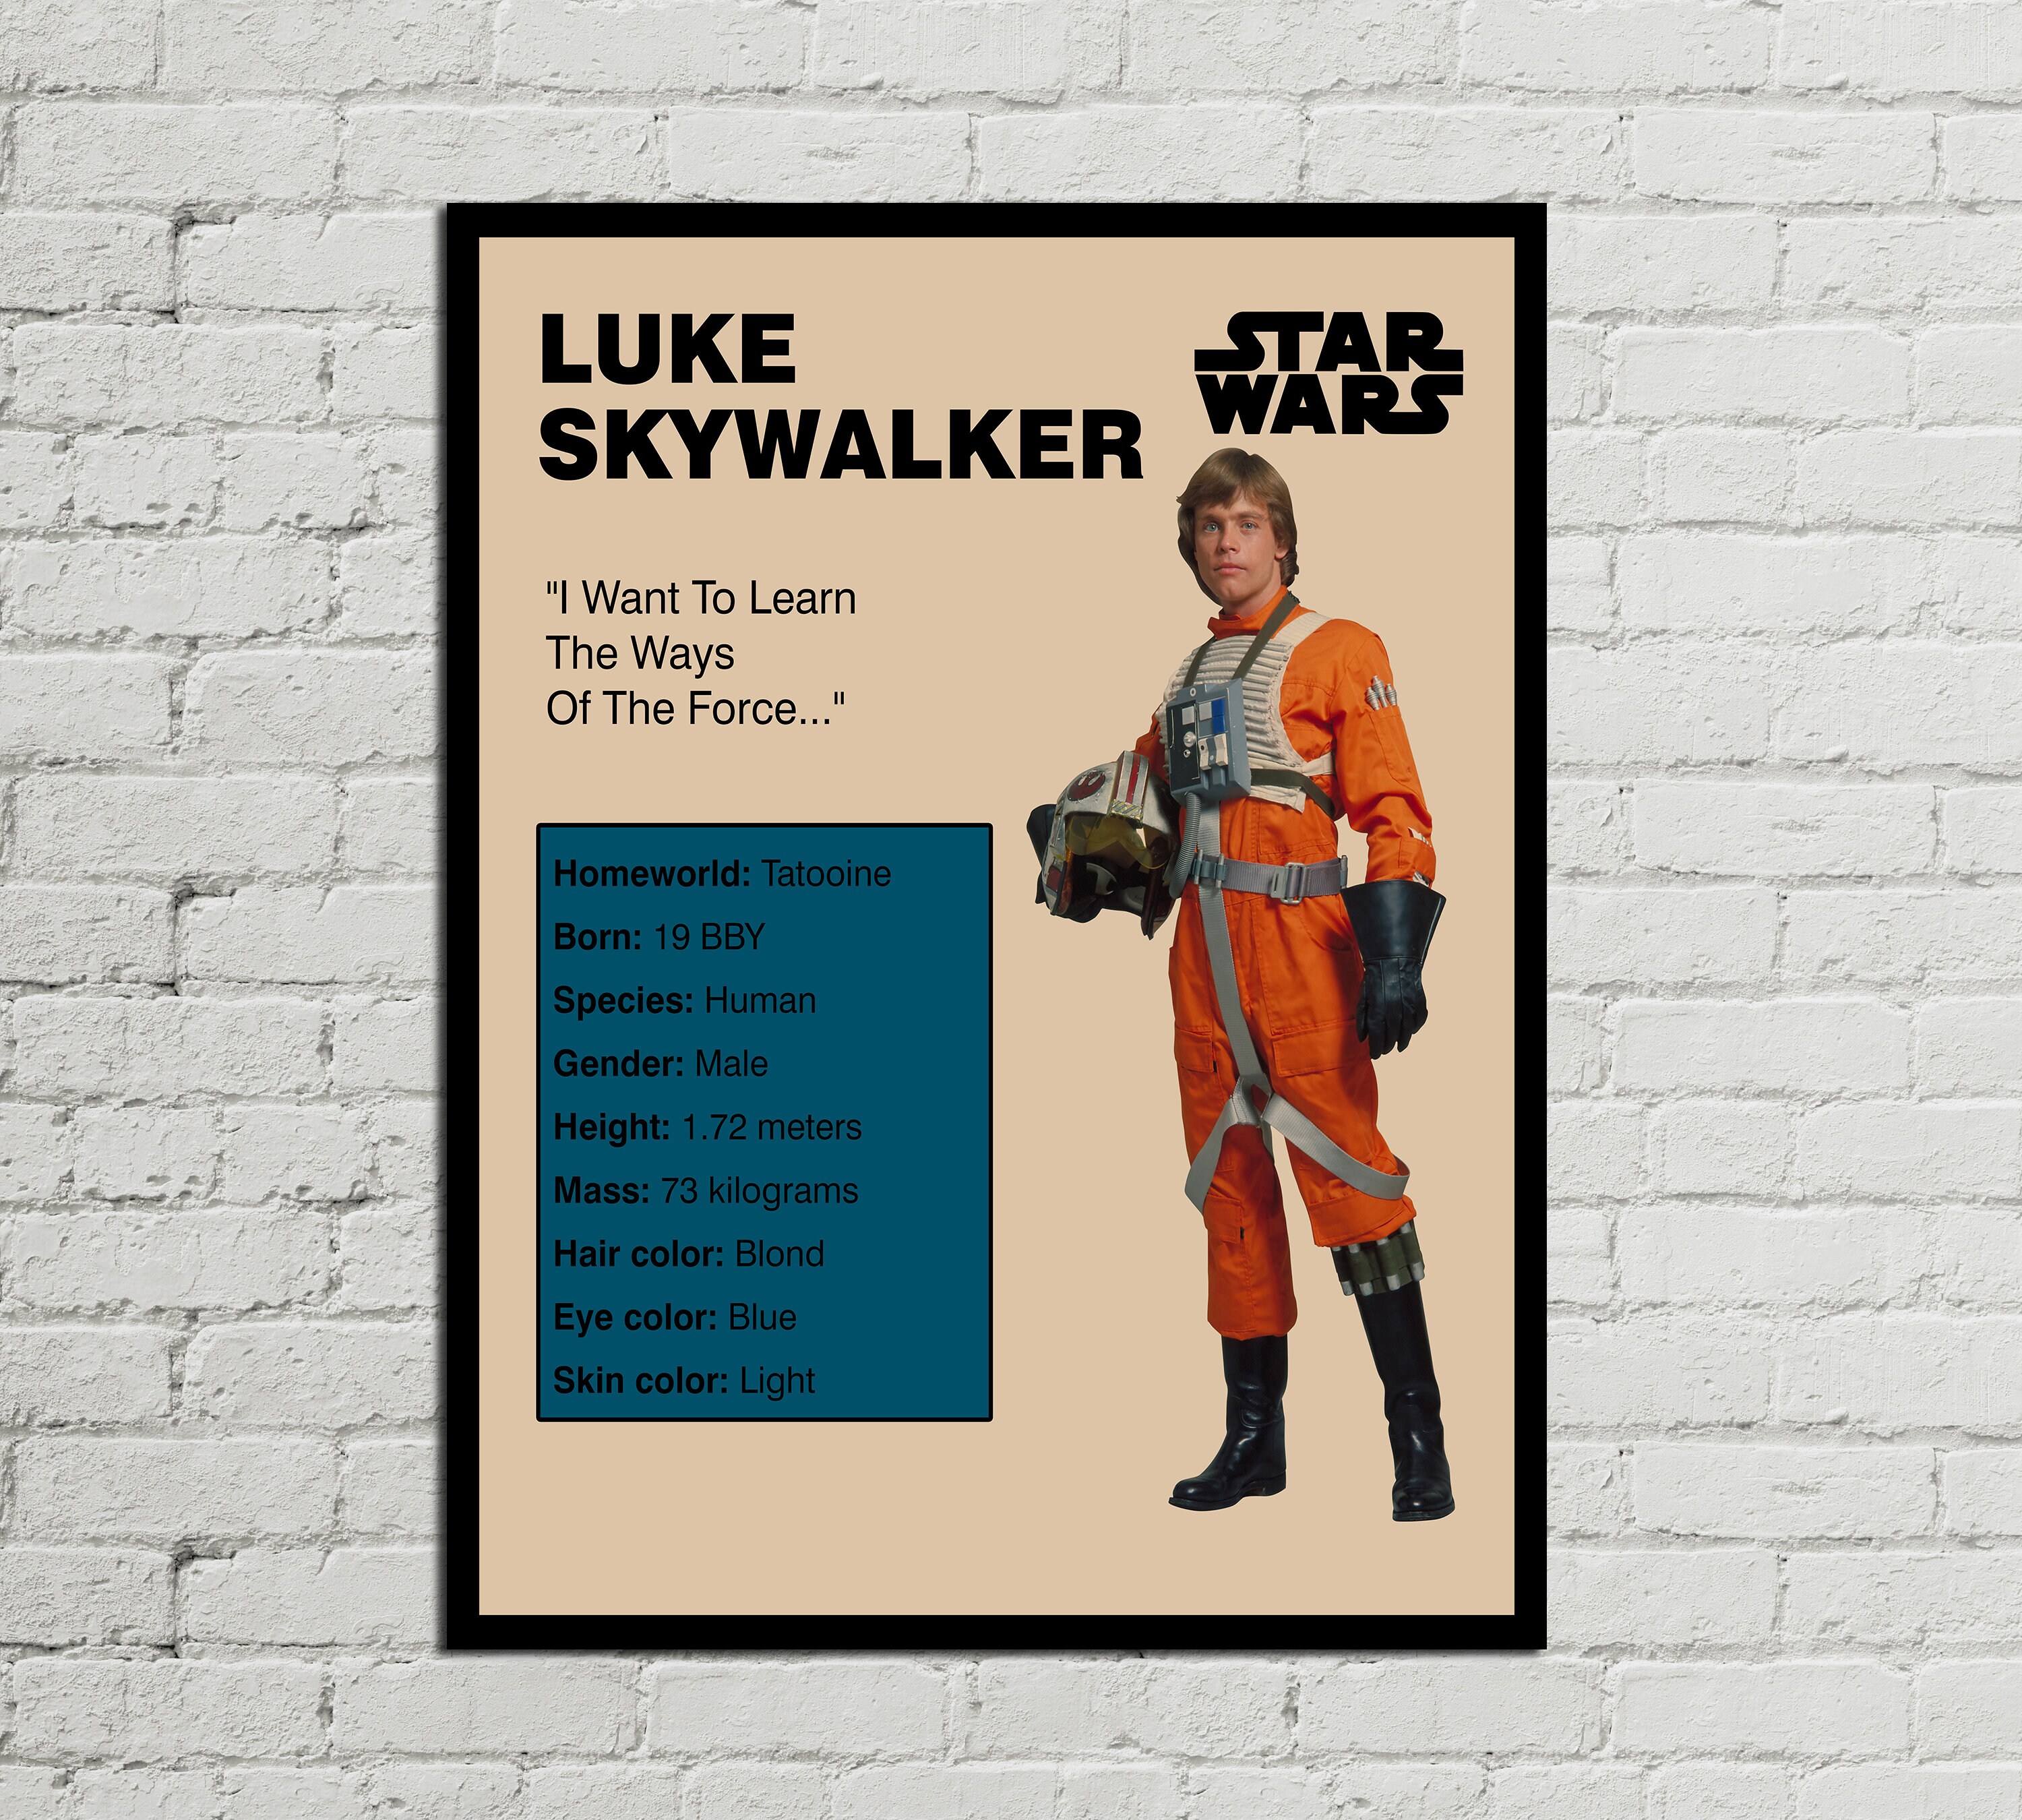 LUKE SKYWALKER POSTER - Star Wars Poster - Minimalist Art - Vintage Inspired Poster - Digital Download - Printable Art - Wall Art - Fan Art